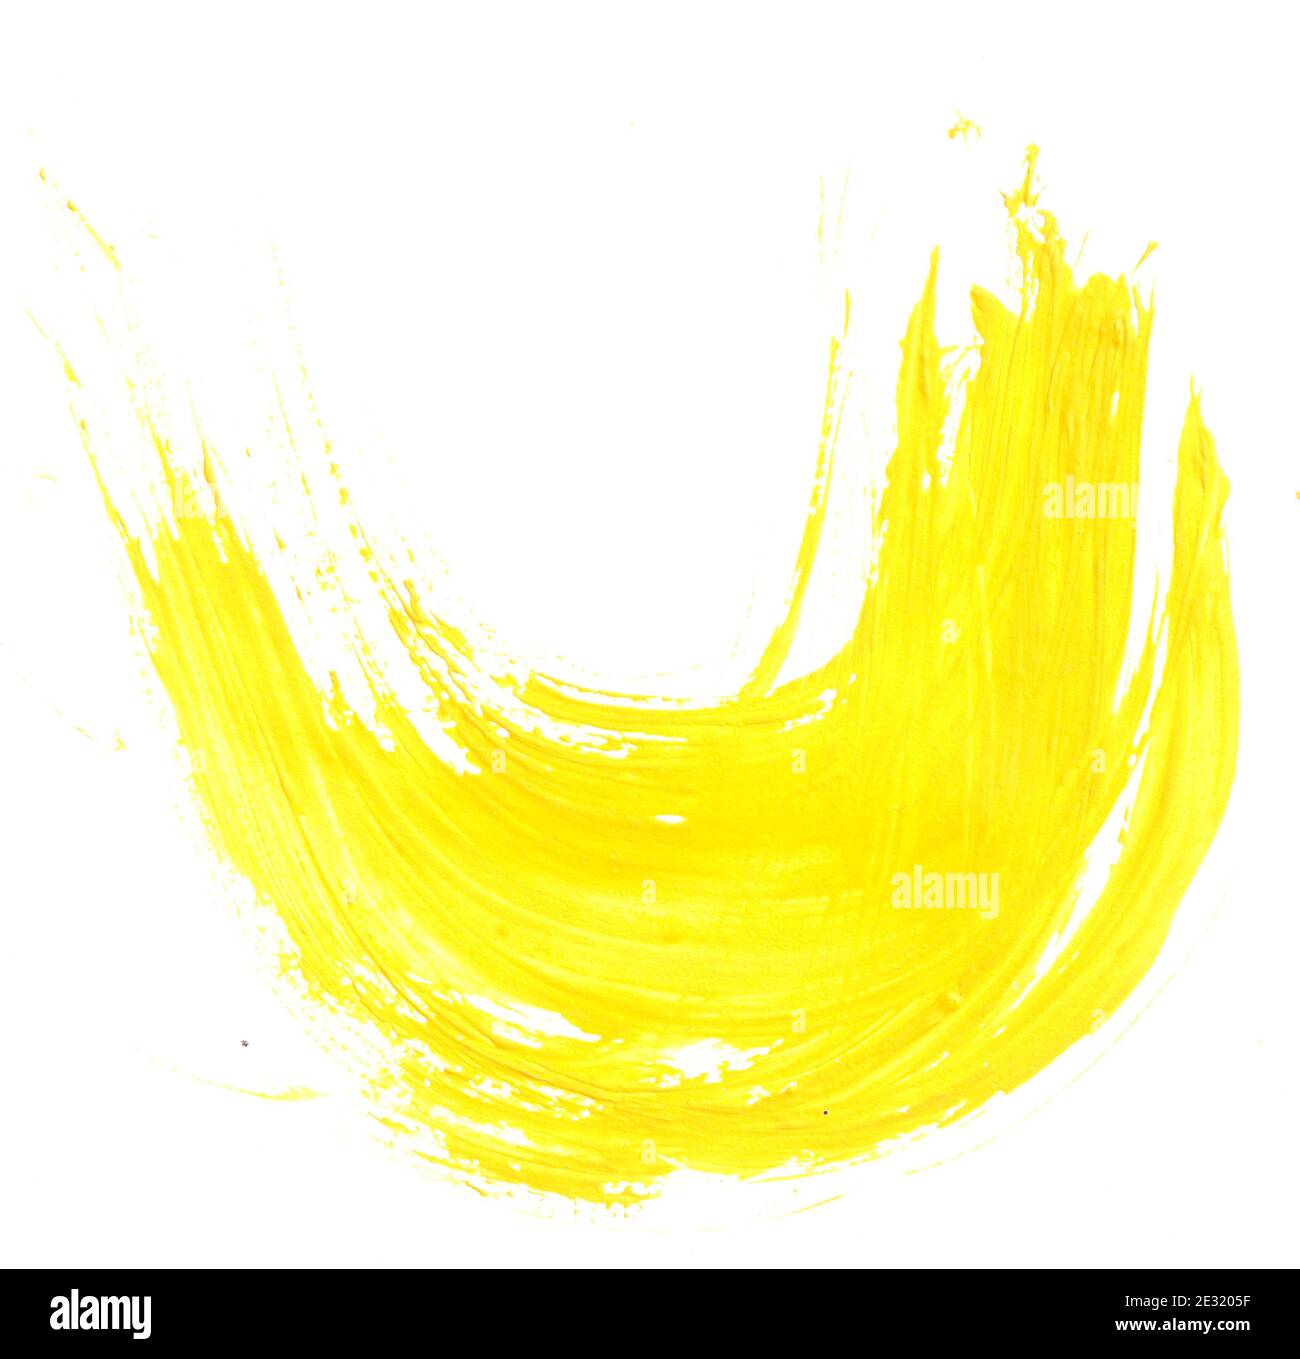 score Monograph argument Yellow brush stroke isolated on white background Stock Photo - Alamy